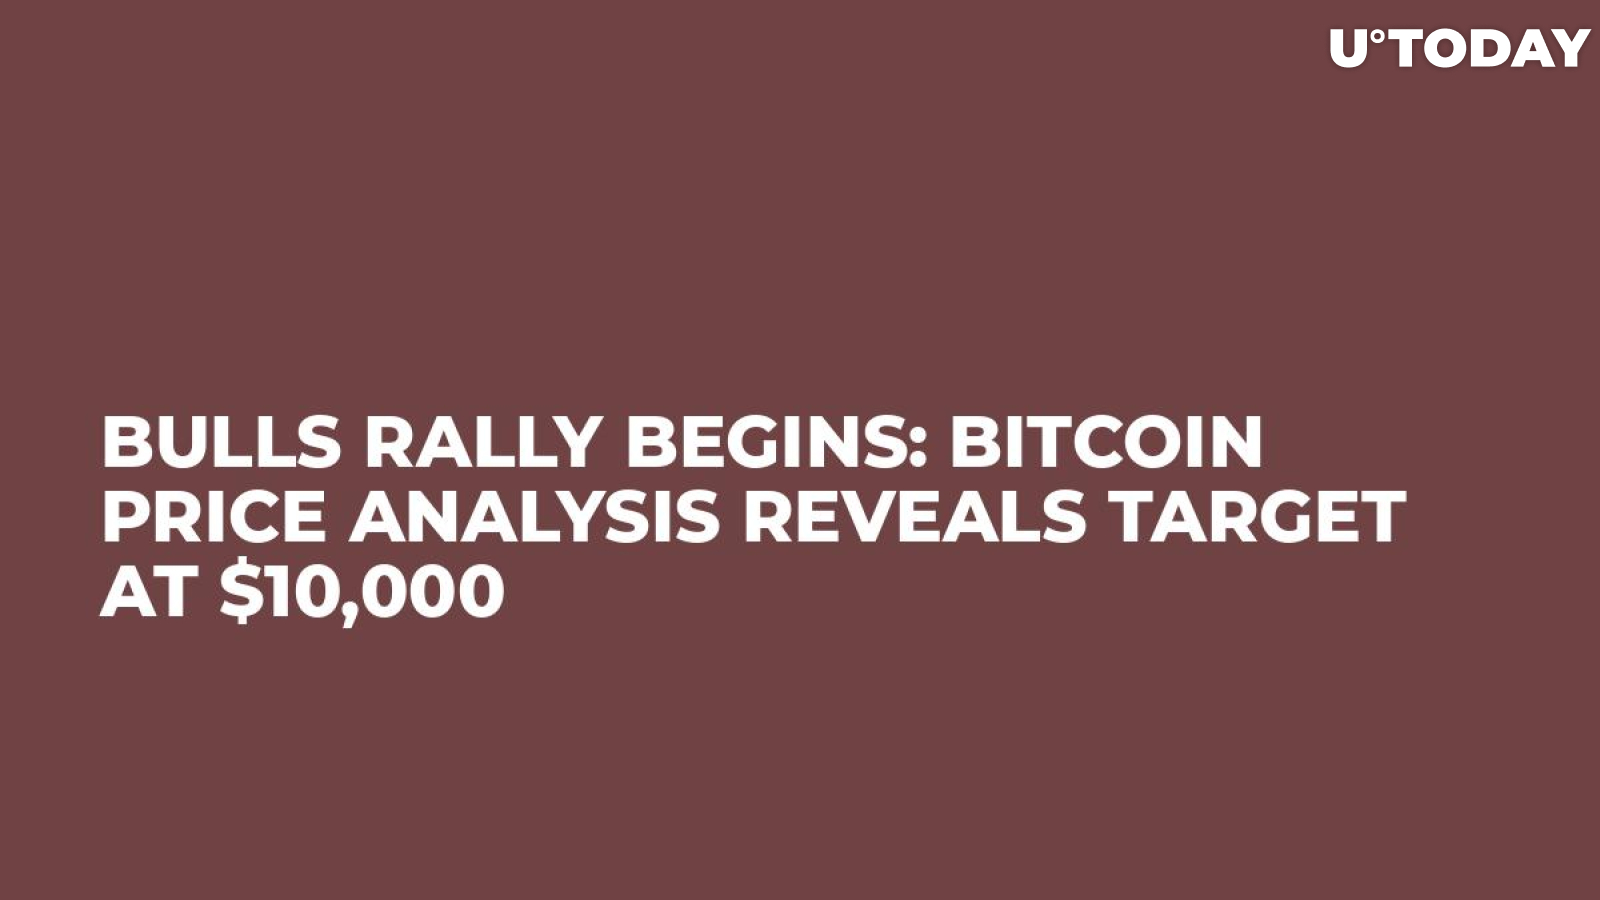 Bulls Rally Begins: Bitcoin Price Analysis Reveals Target at $10,000